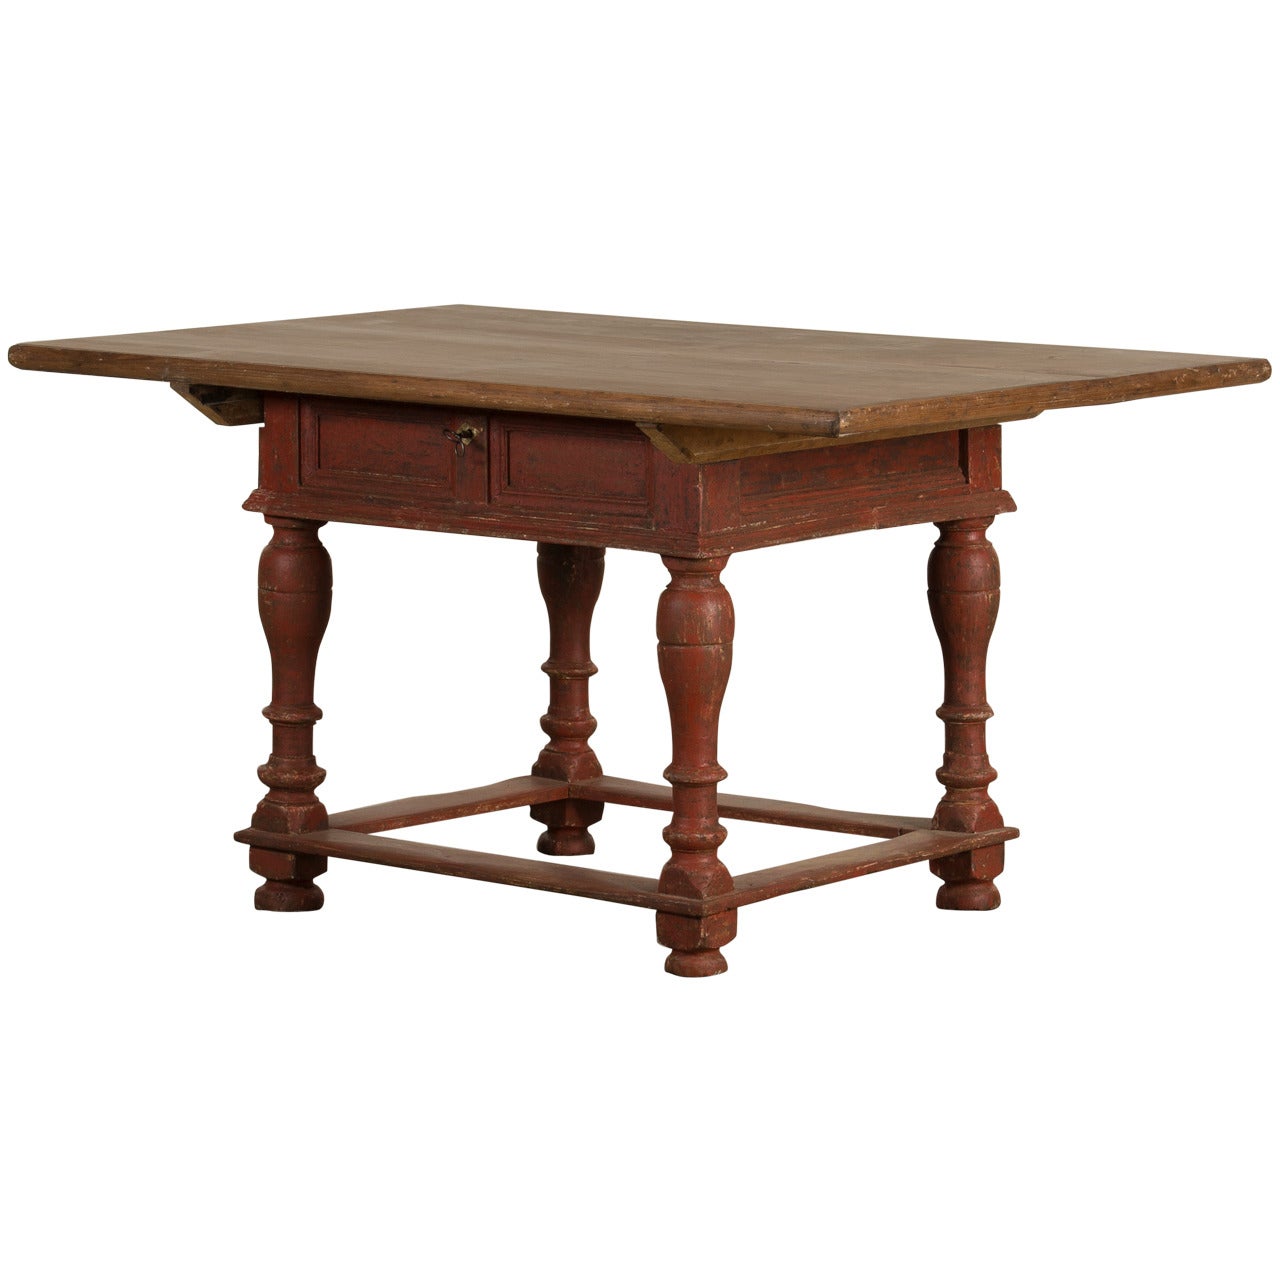 Swedish Baroque table